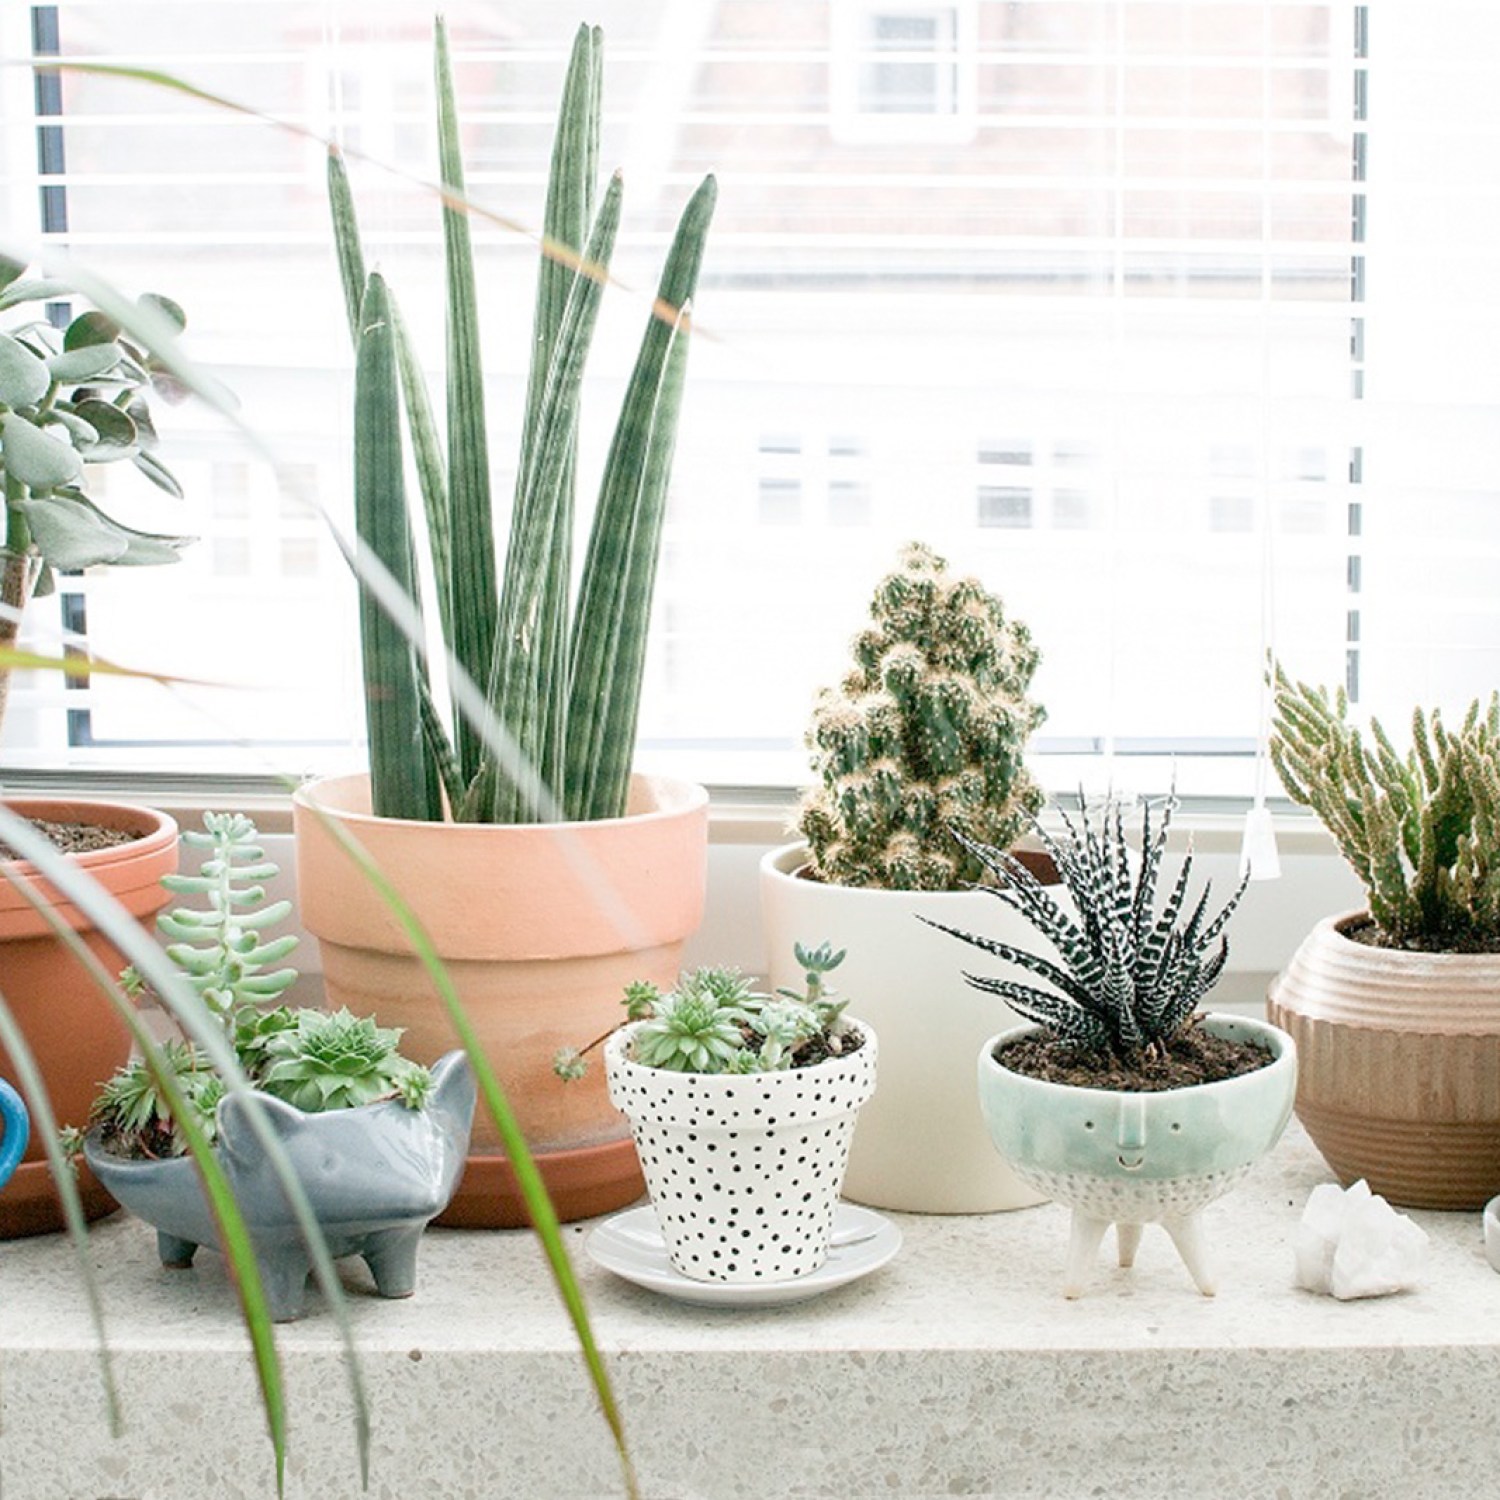 Plants on a home windowsill